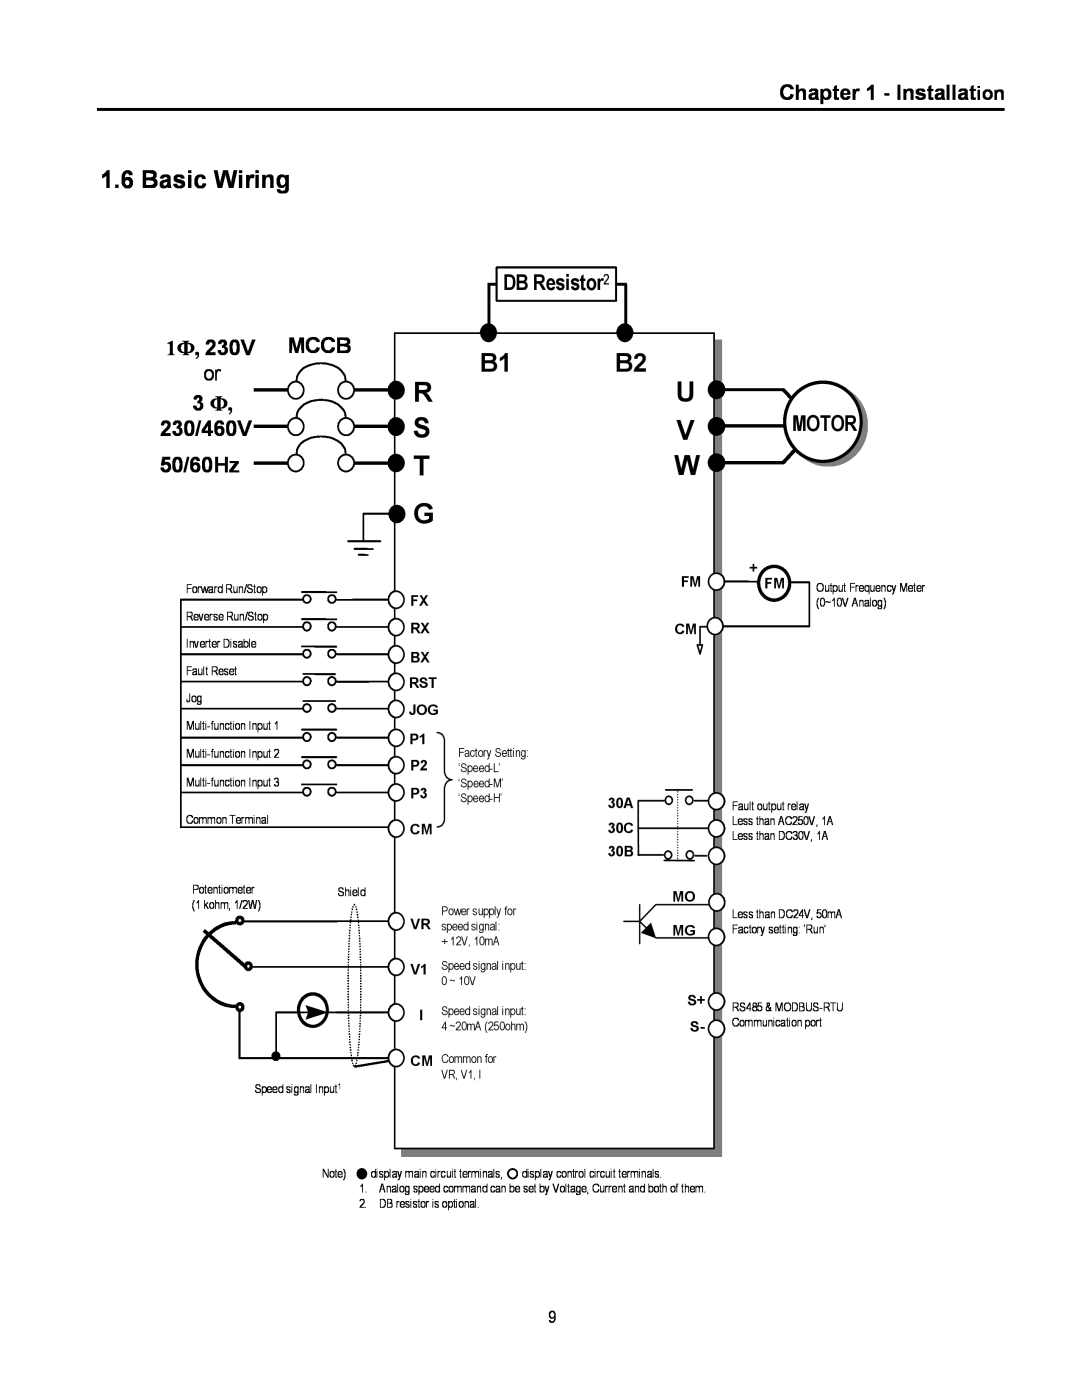 Cleveland Range inverter manual Basic Wiring, Installation 